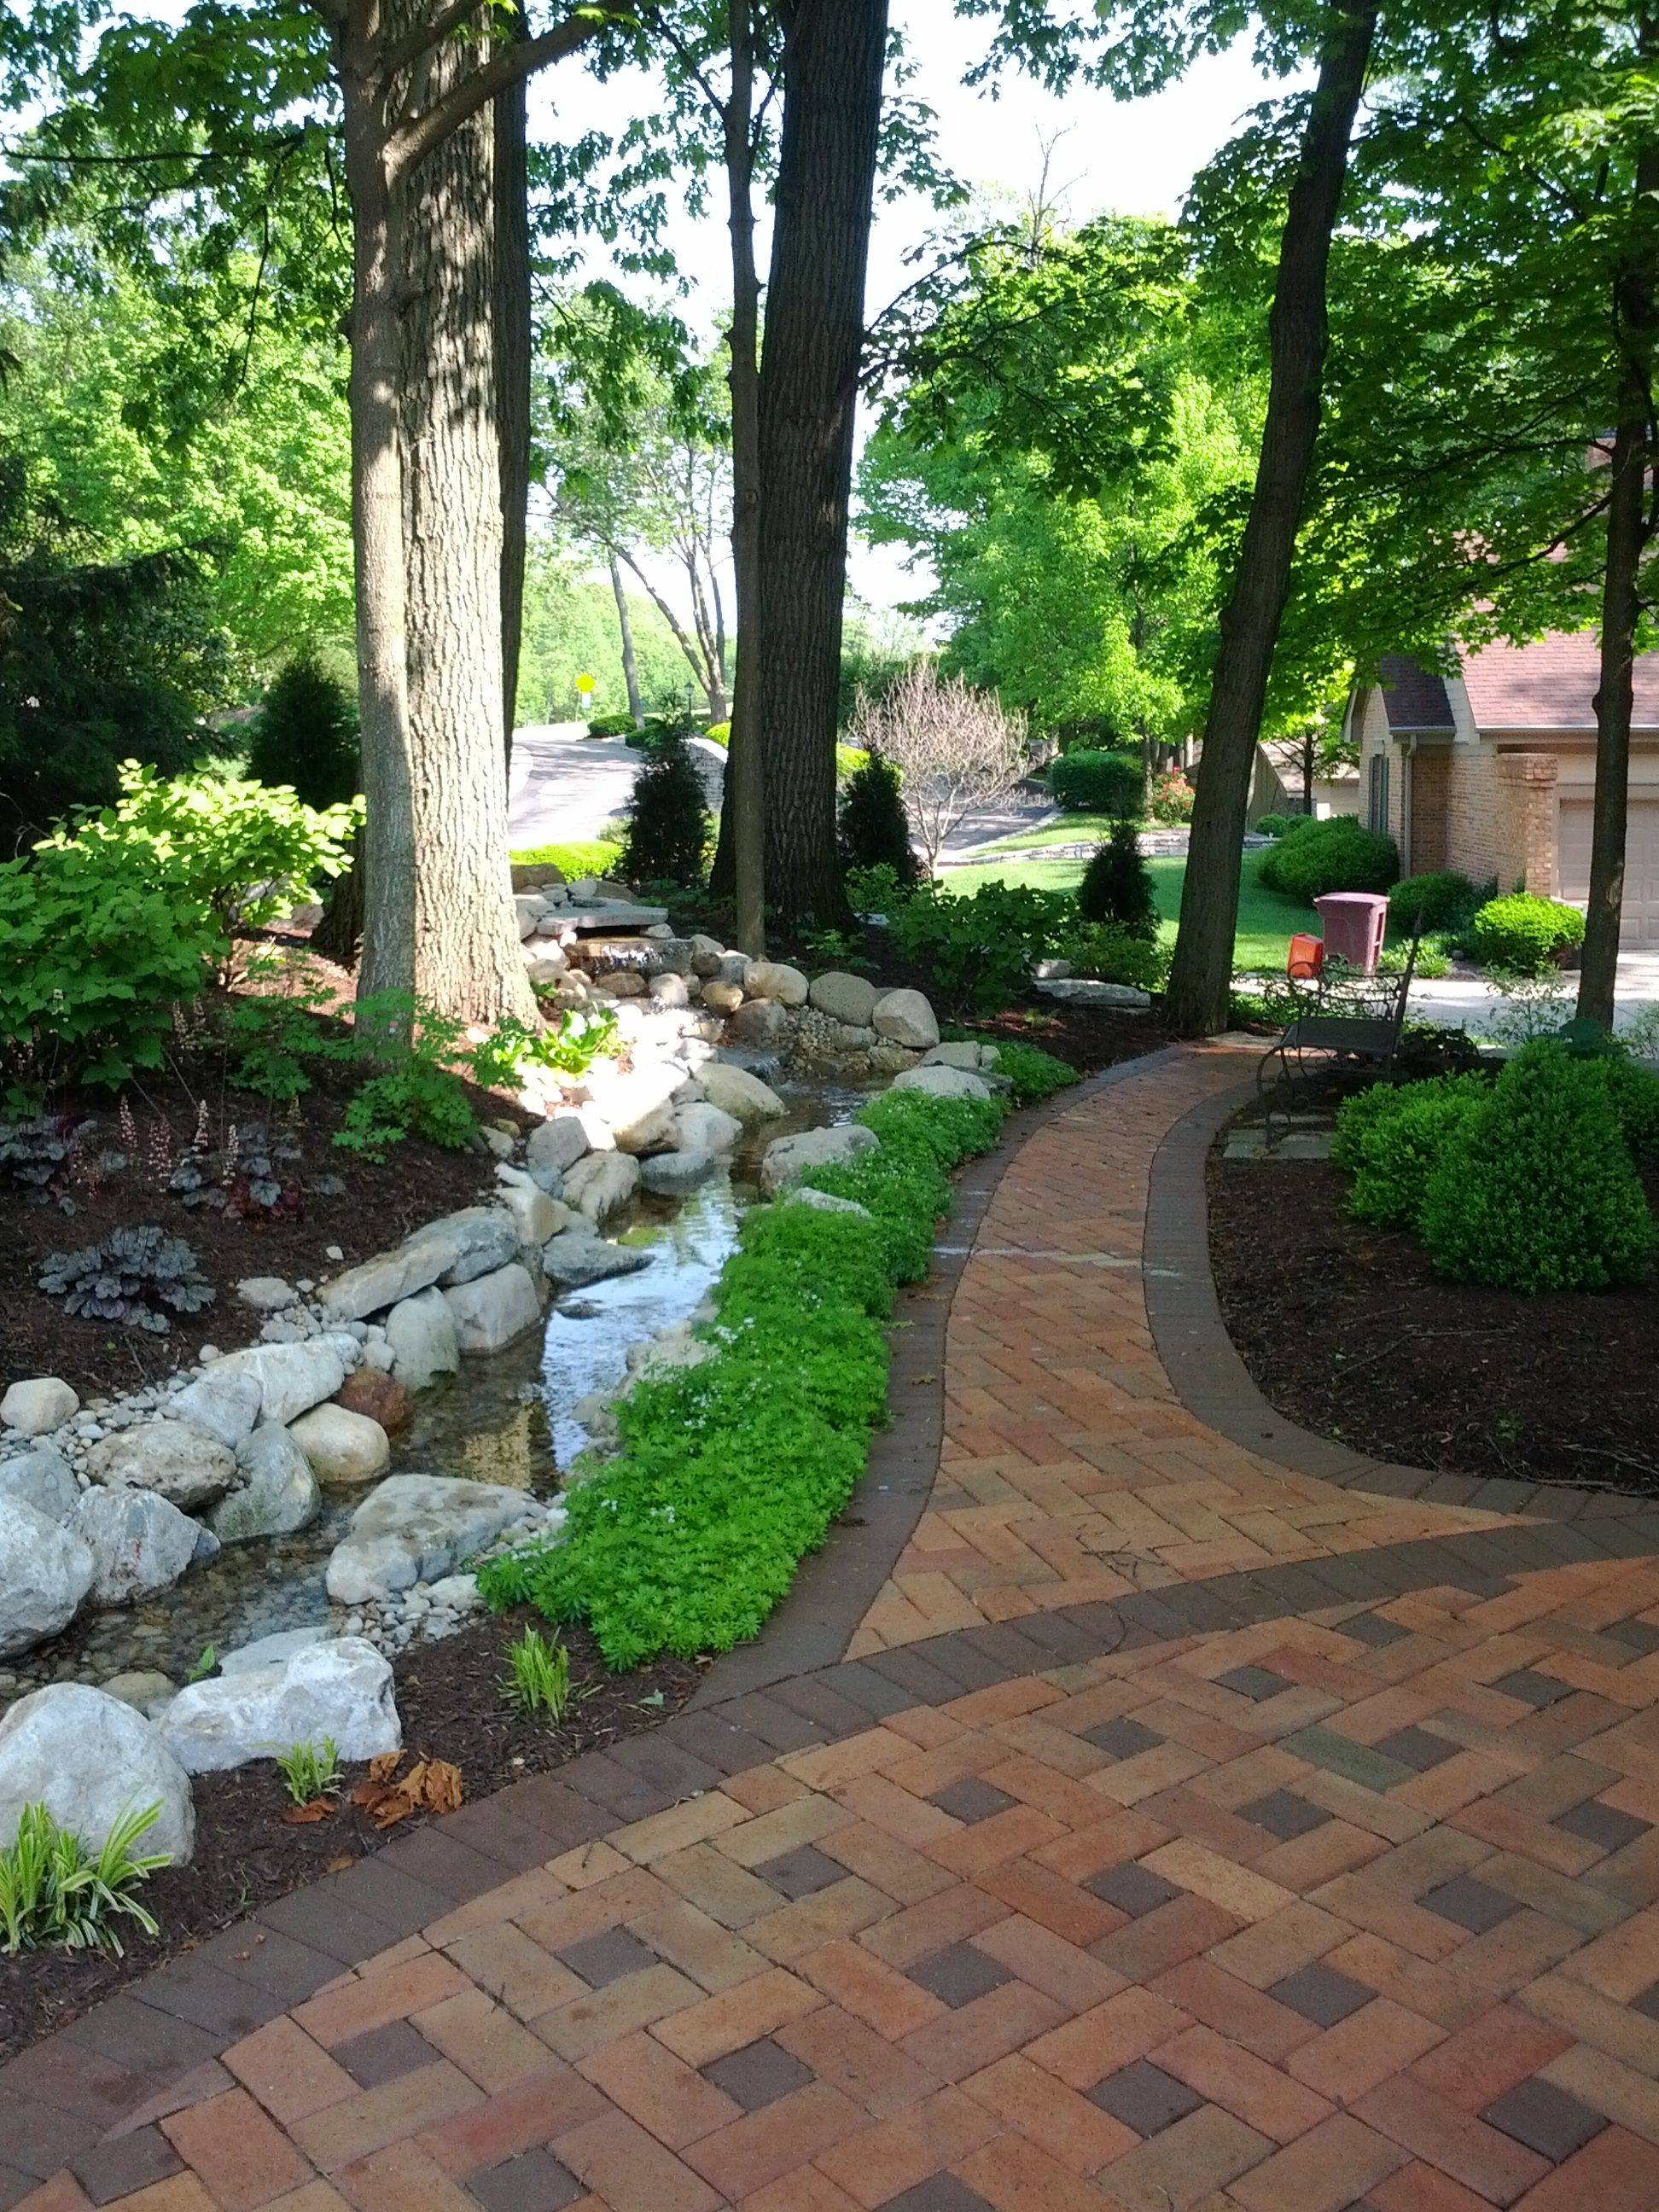 Landscaping Outdoor Patio Stone Backyard Pavers Ideas Amazing Smart